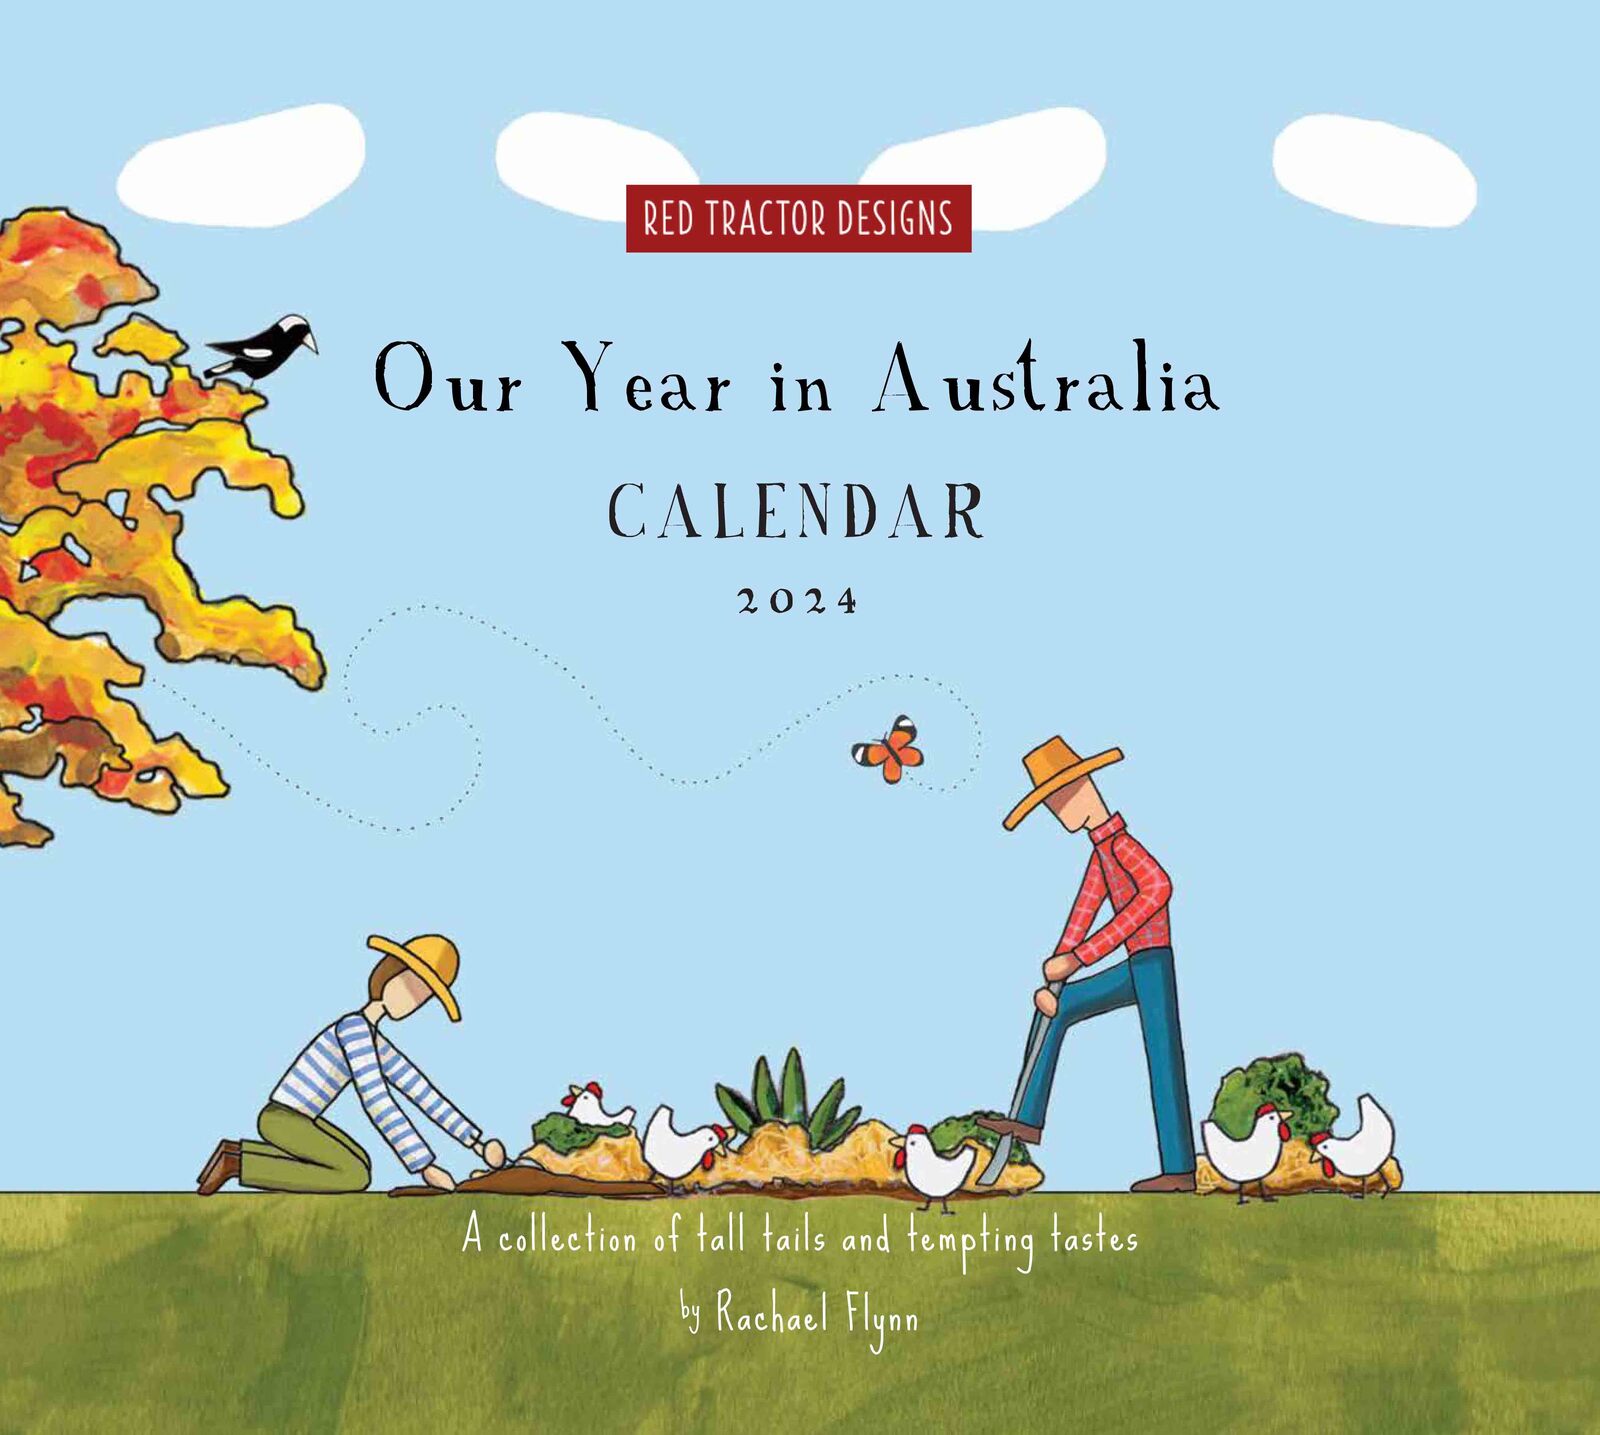  Our Year in Australia 2024 Calendar